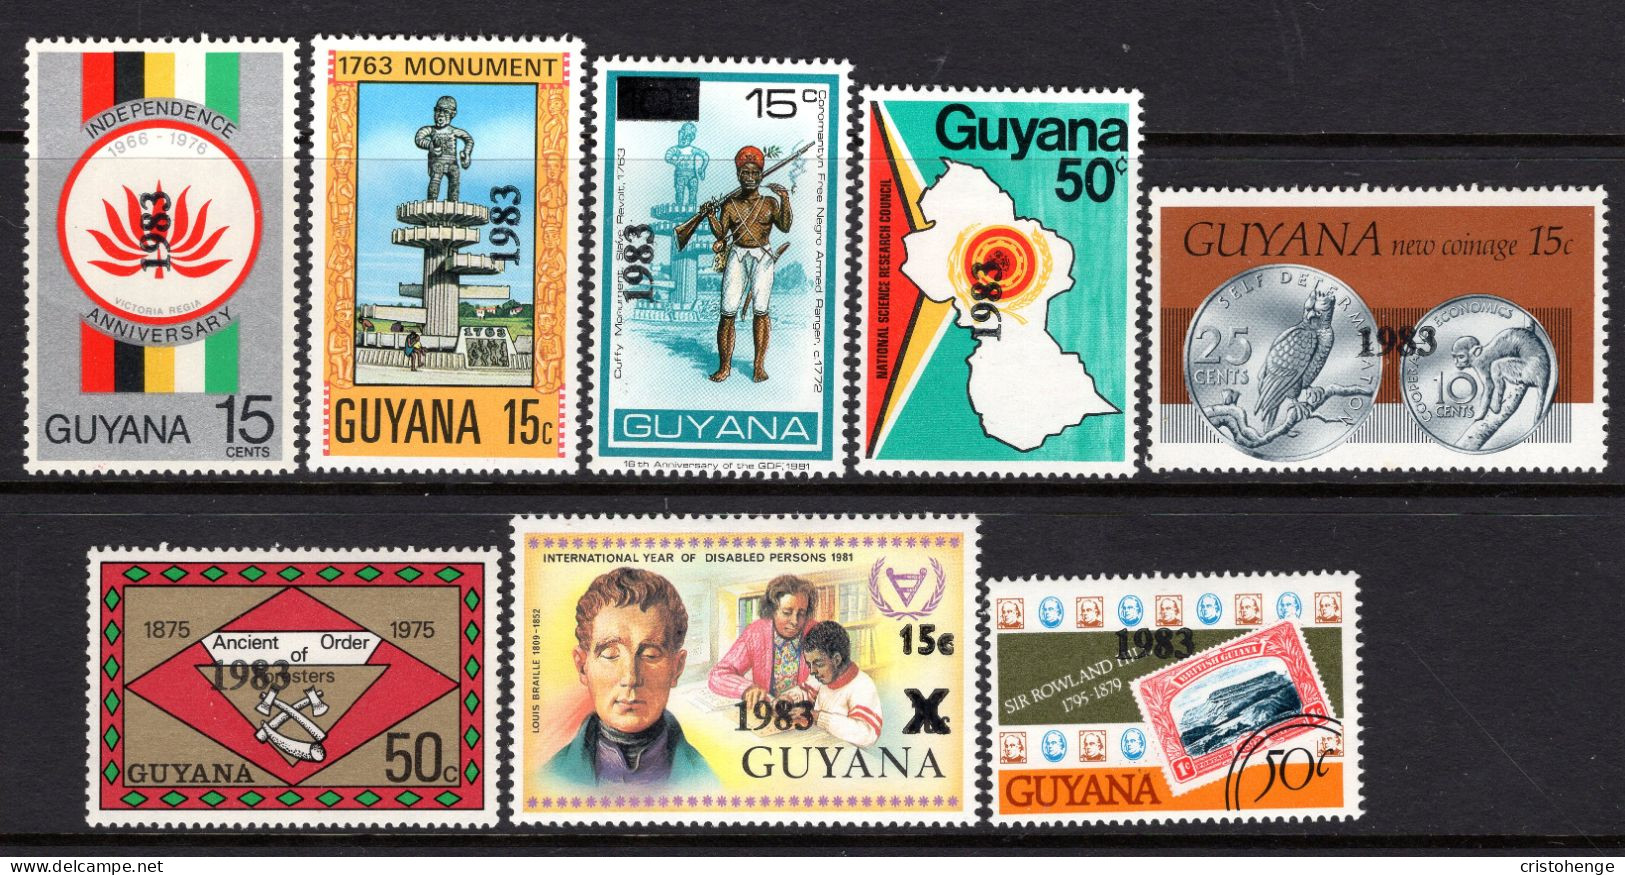 Guyana 1983 Surcharges Set HM (SG 1036-1043) - Guyana (1966-...)